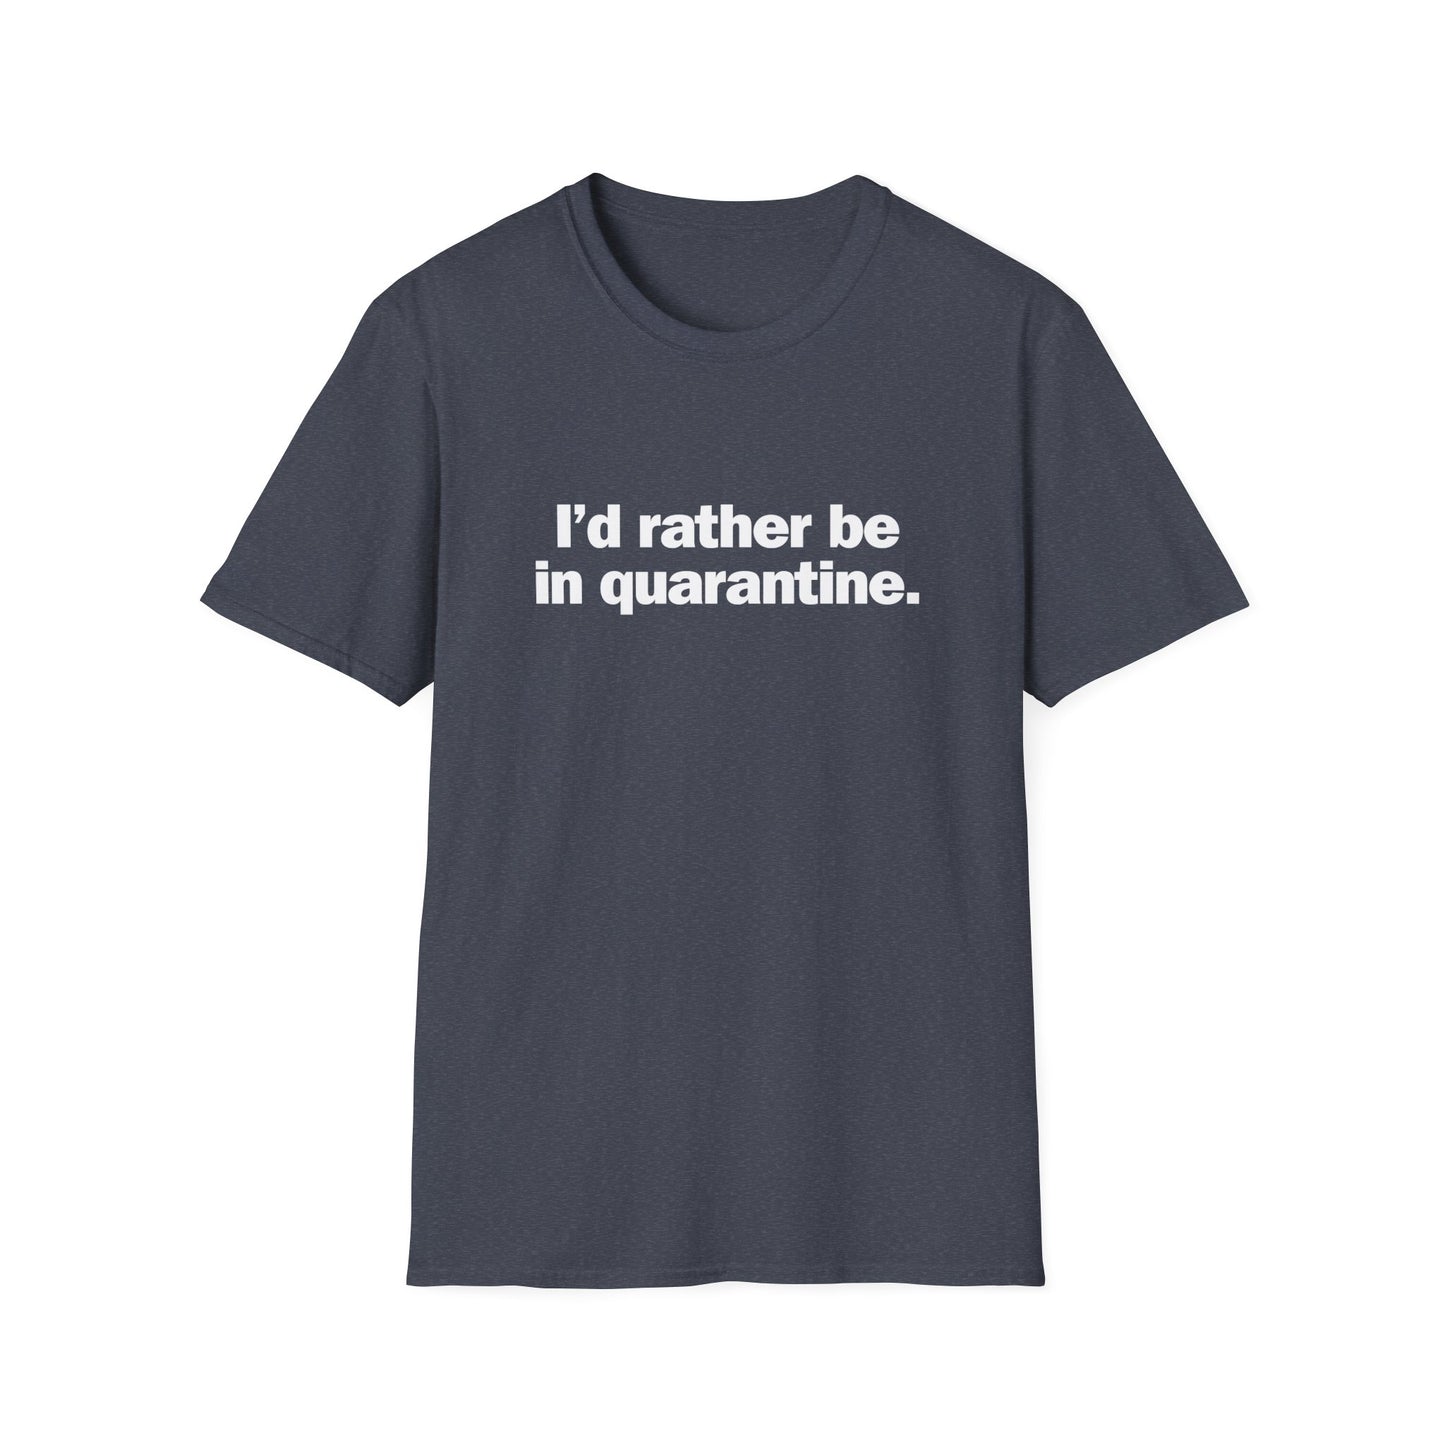 I'd rather be in quarantine. - T-Shirt